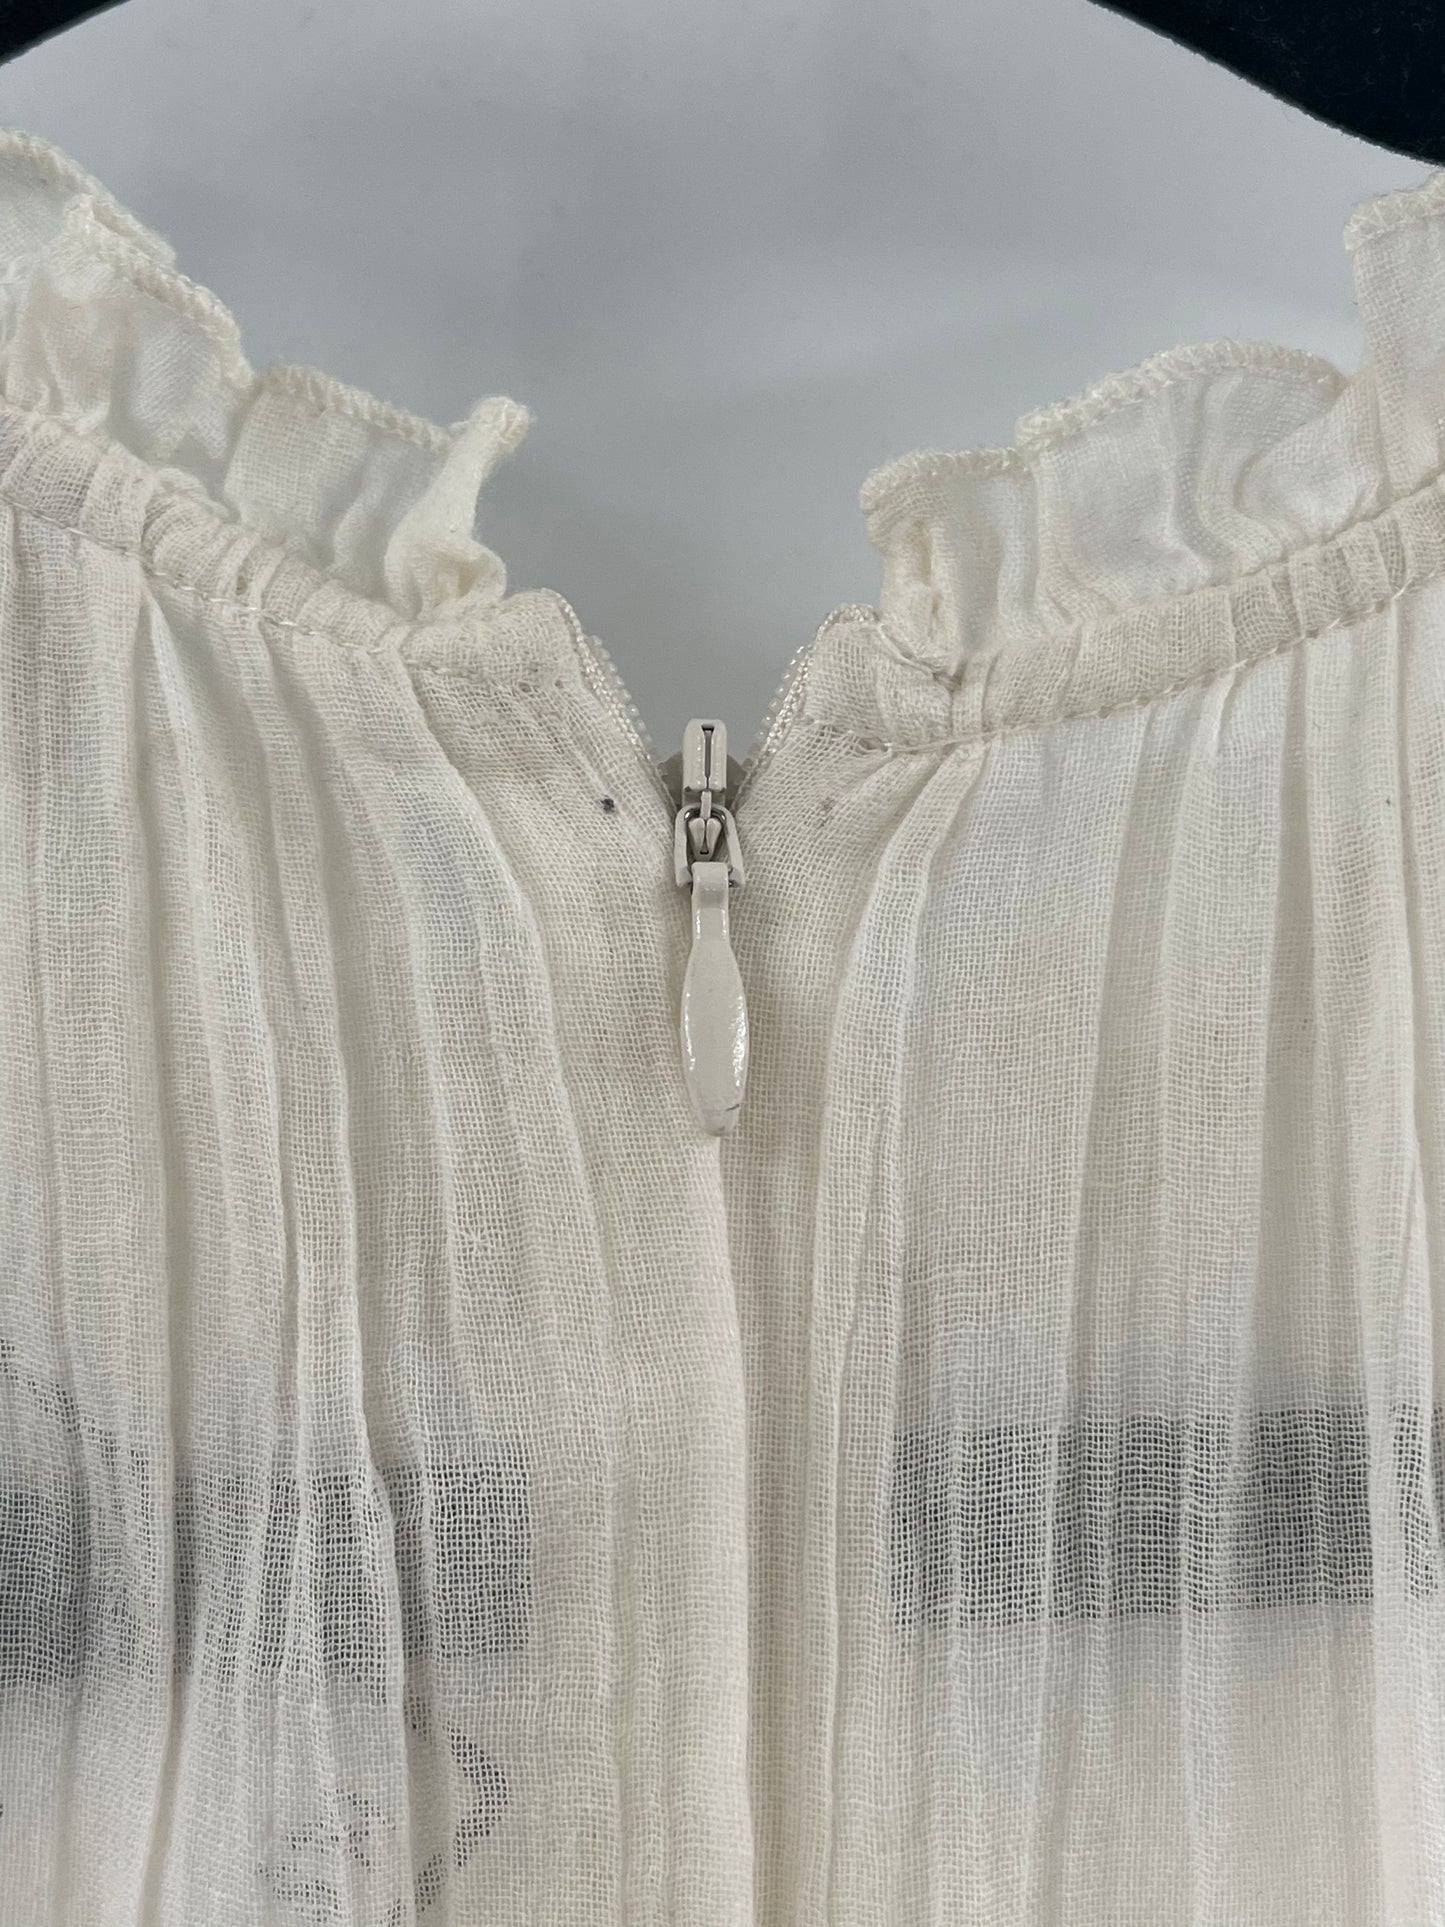 Urban Outfitters Cream Ruffled Mini Dress (Sz M)